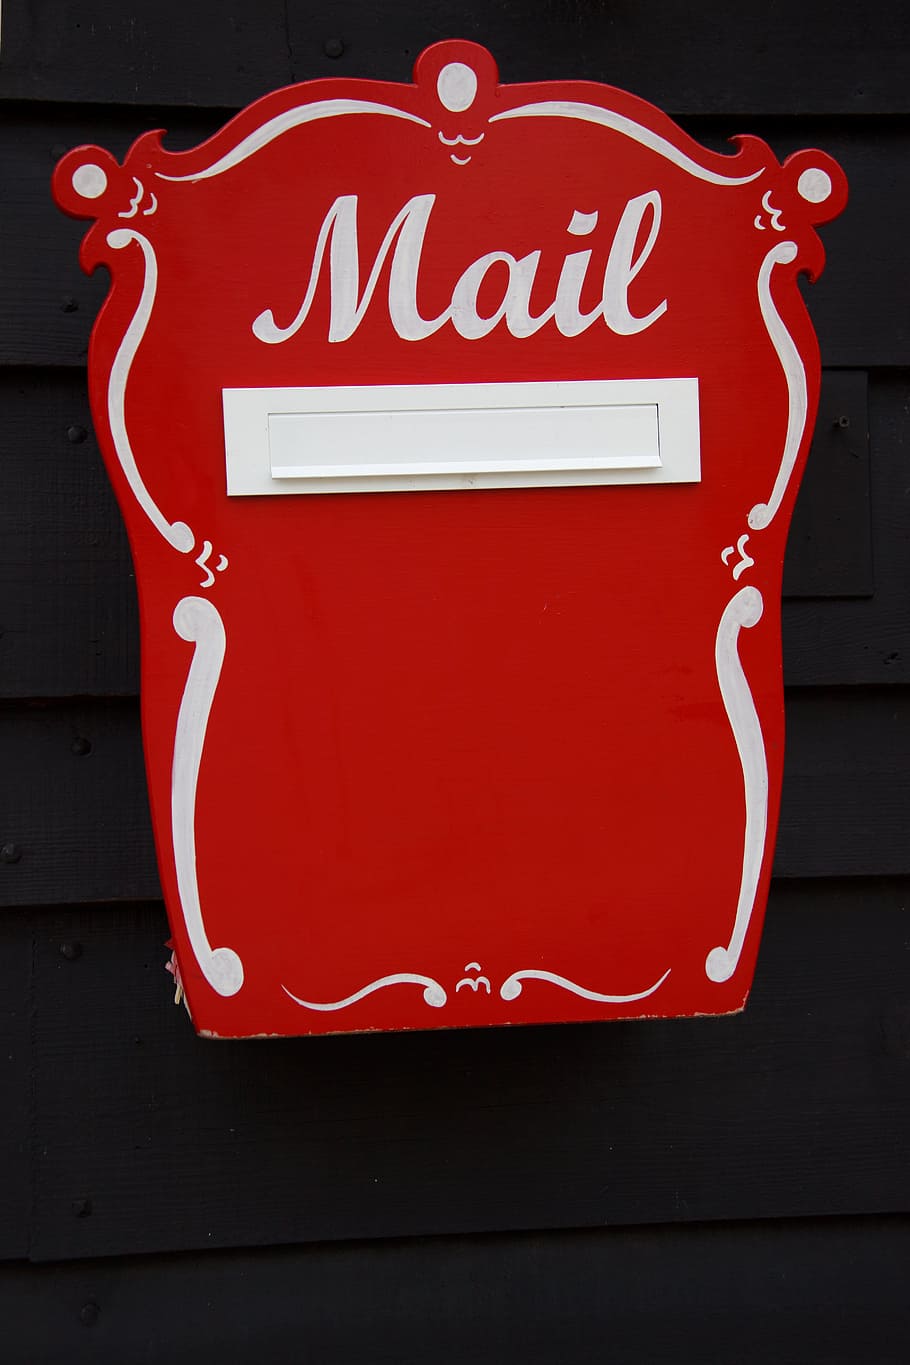 Kotak, Wadah, Korespondensi, Kirim, surat, kotak surat, pesan, objek, pos, merah